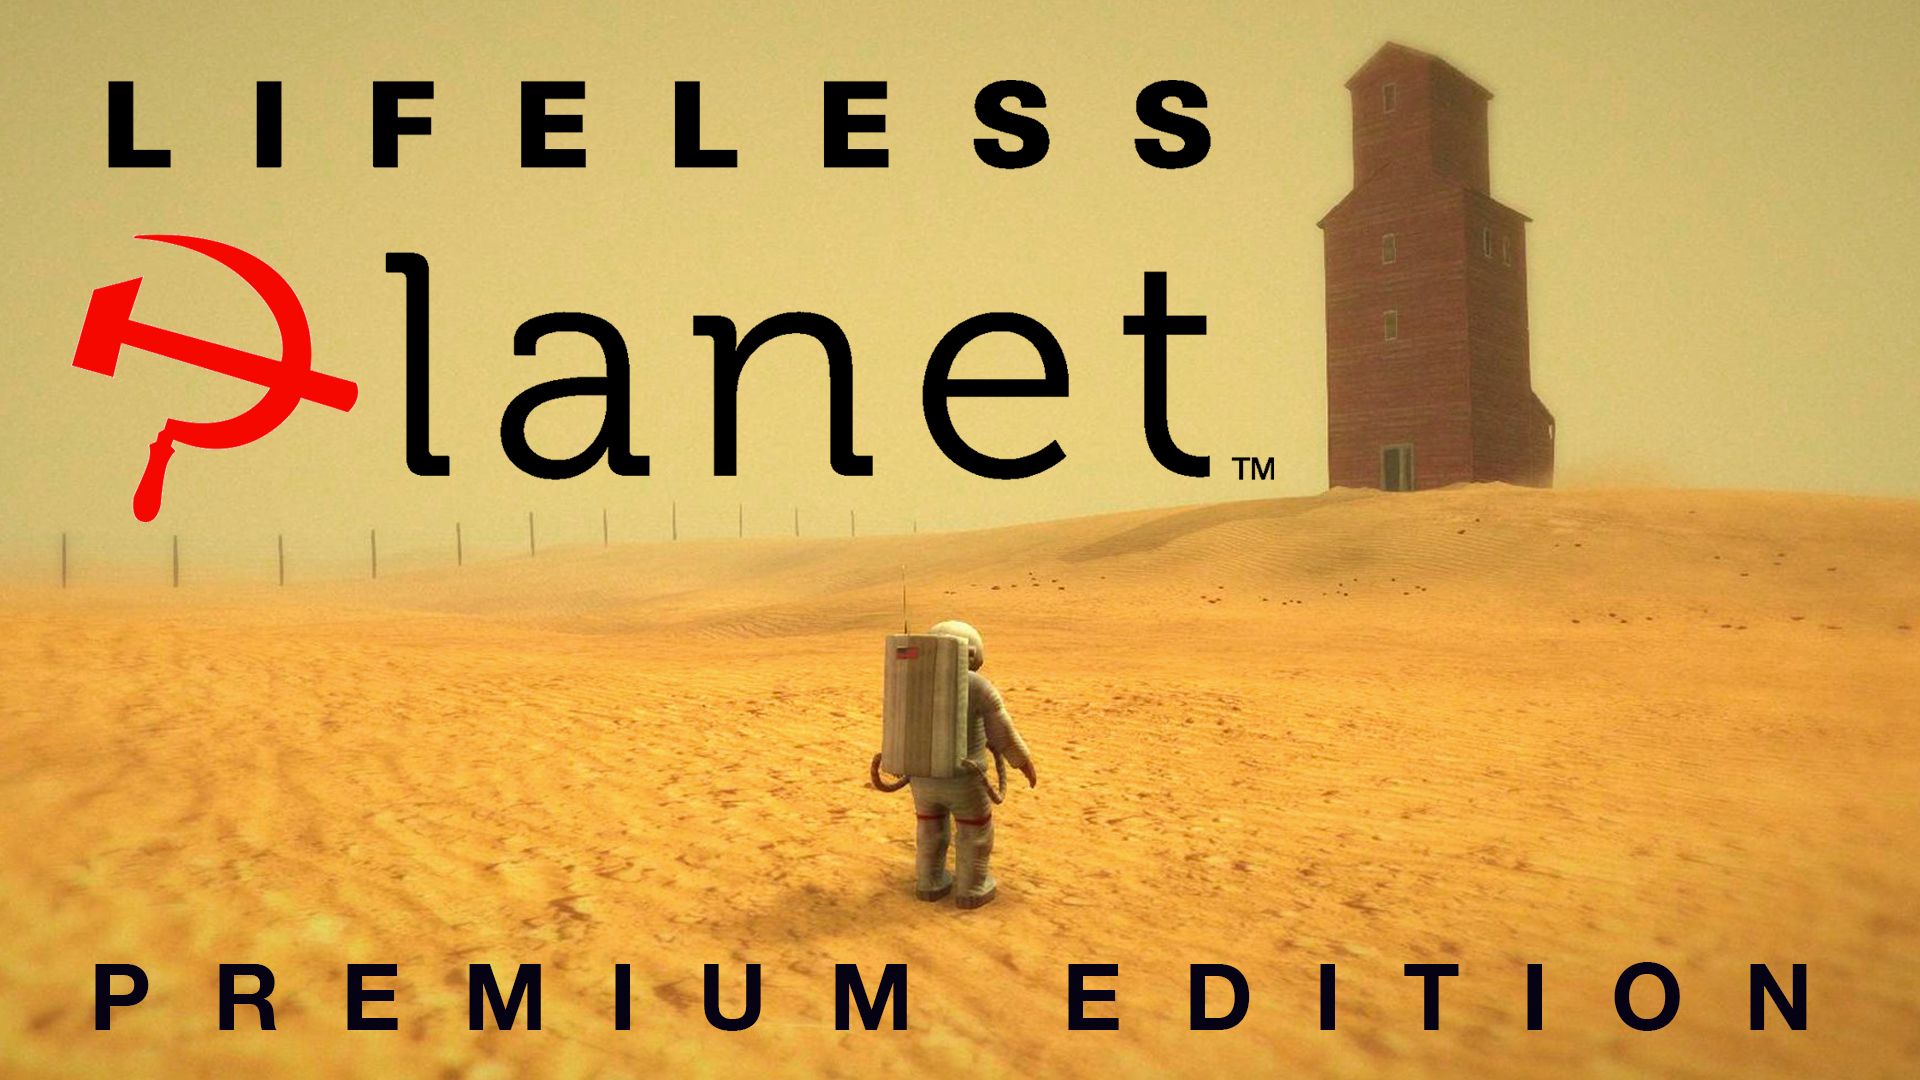 lifeless planet premier edition download